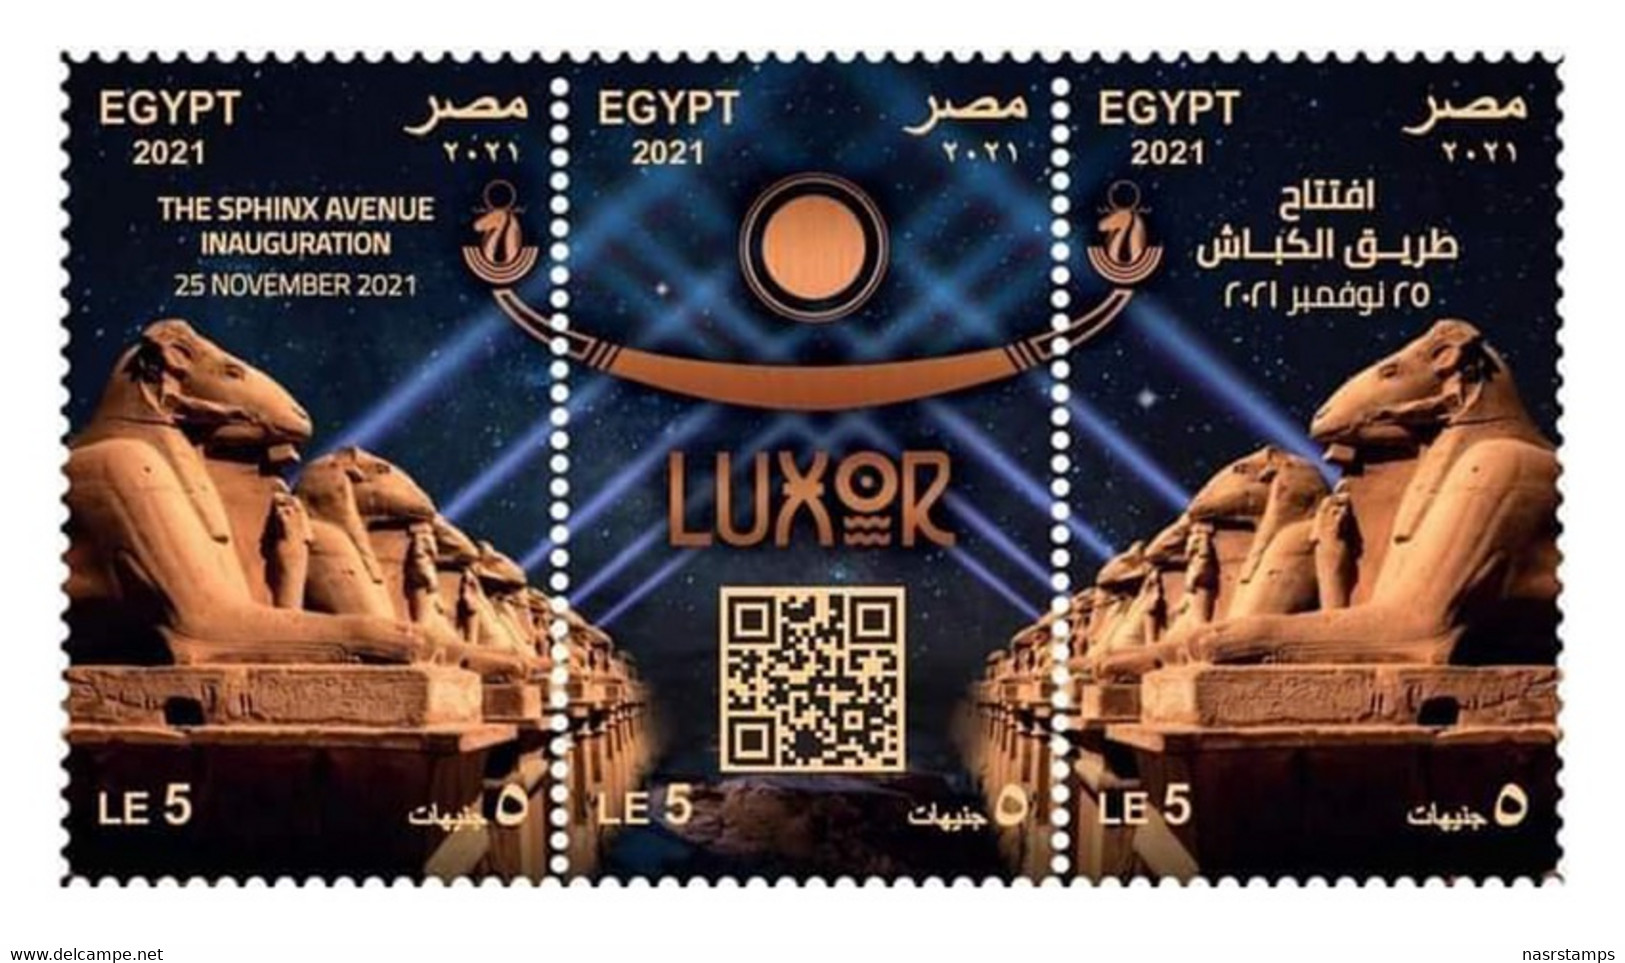 Egypt - 2021 - NEW - Complete Sheet - ( The Sphinx Avenue Inauguration - LUXOR ) - MNH** - Aegyptologie